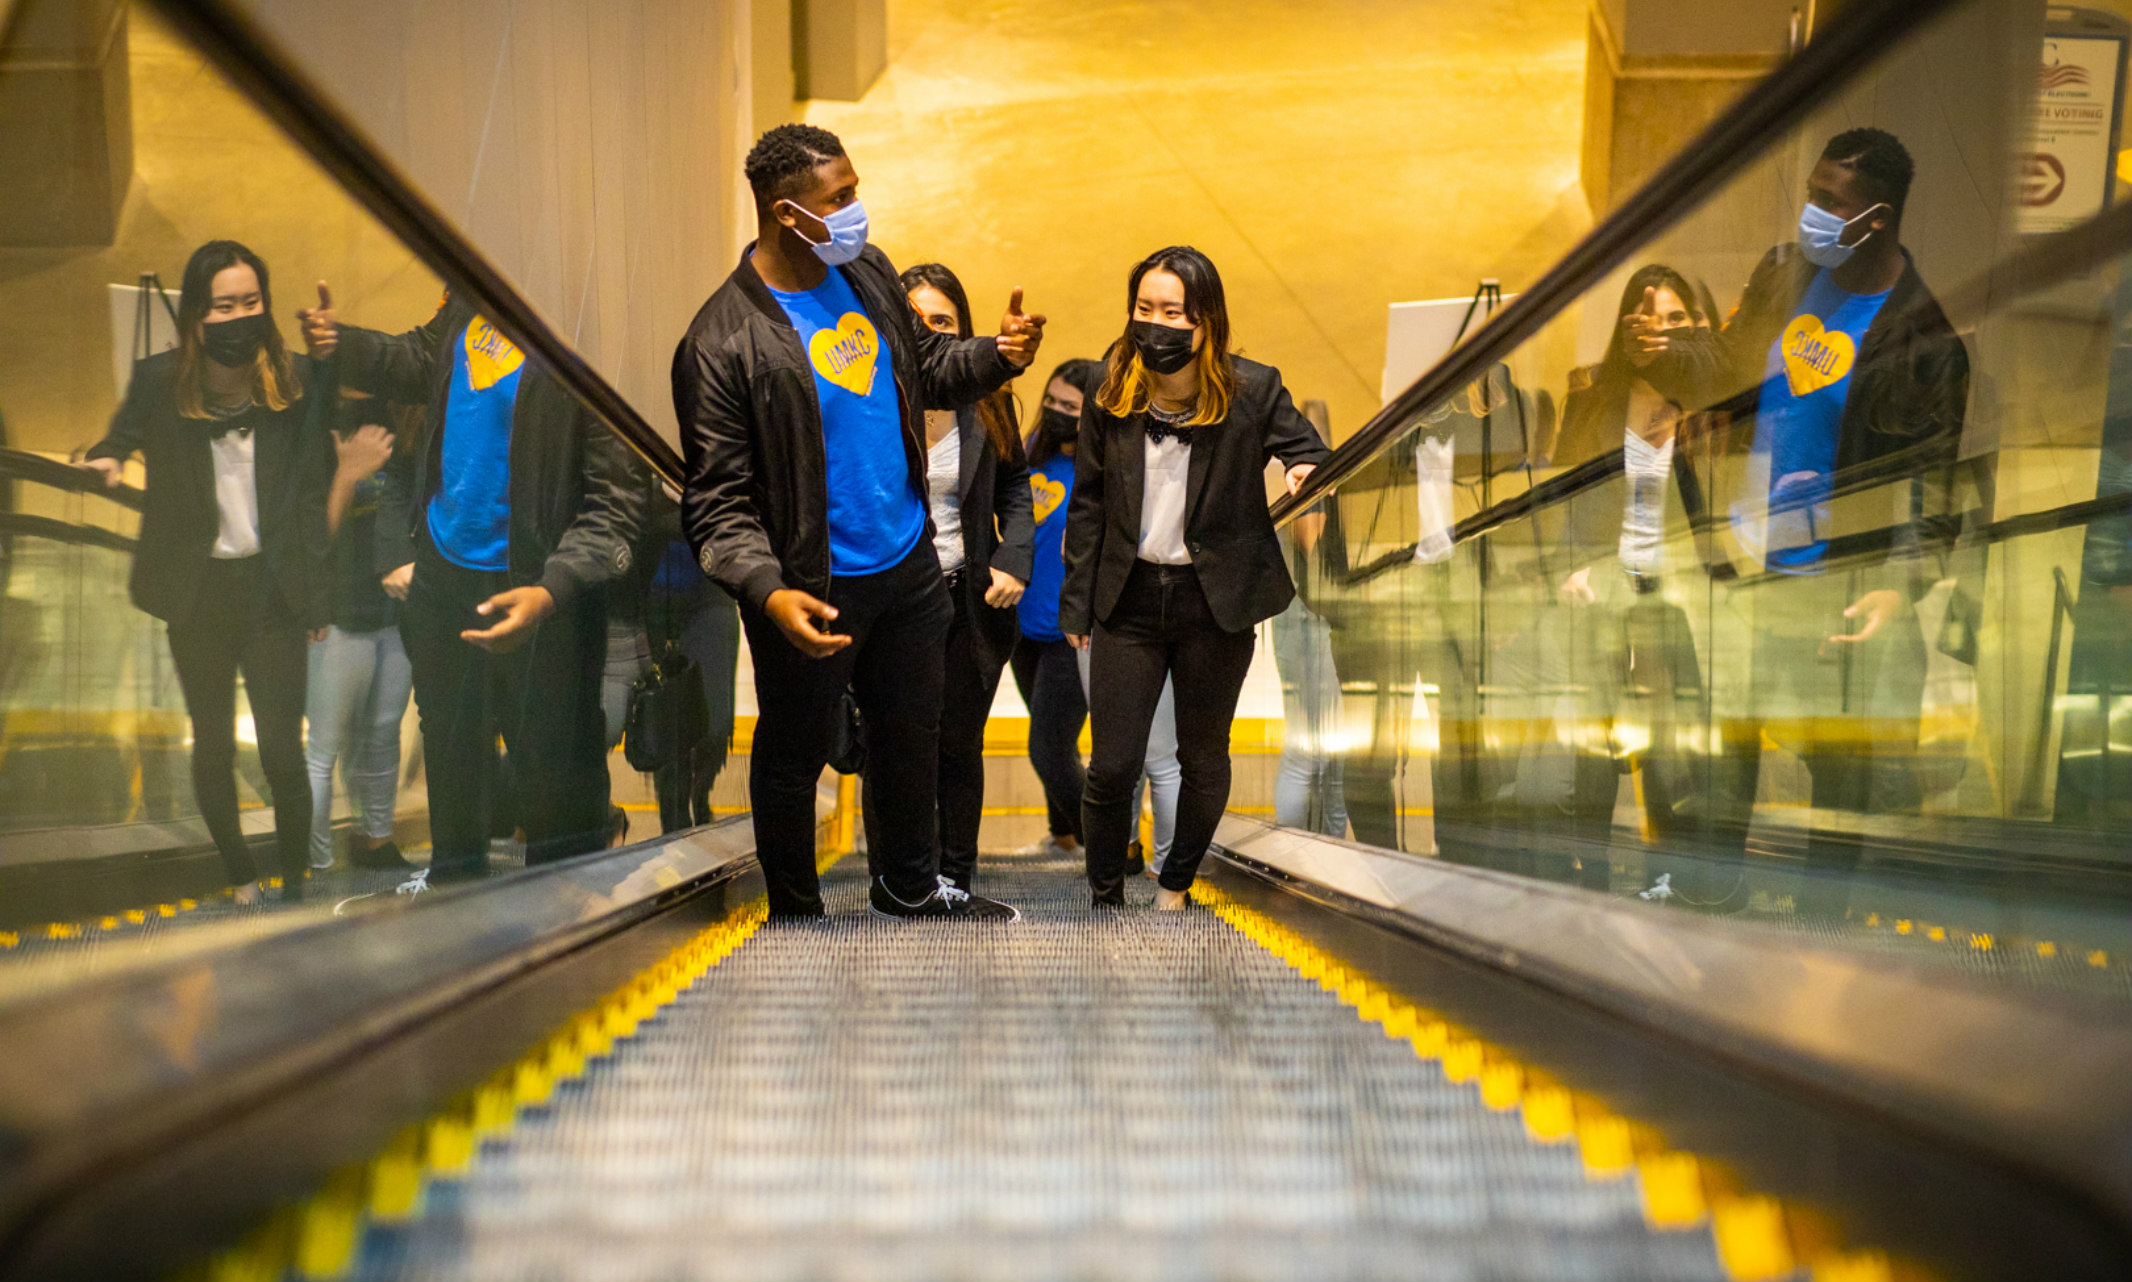 Students on an escalator